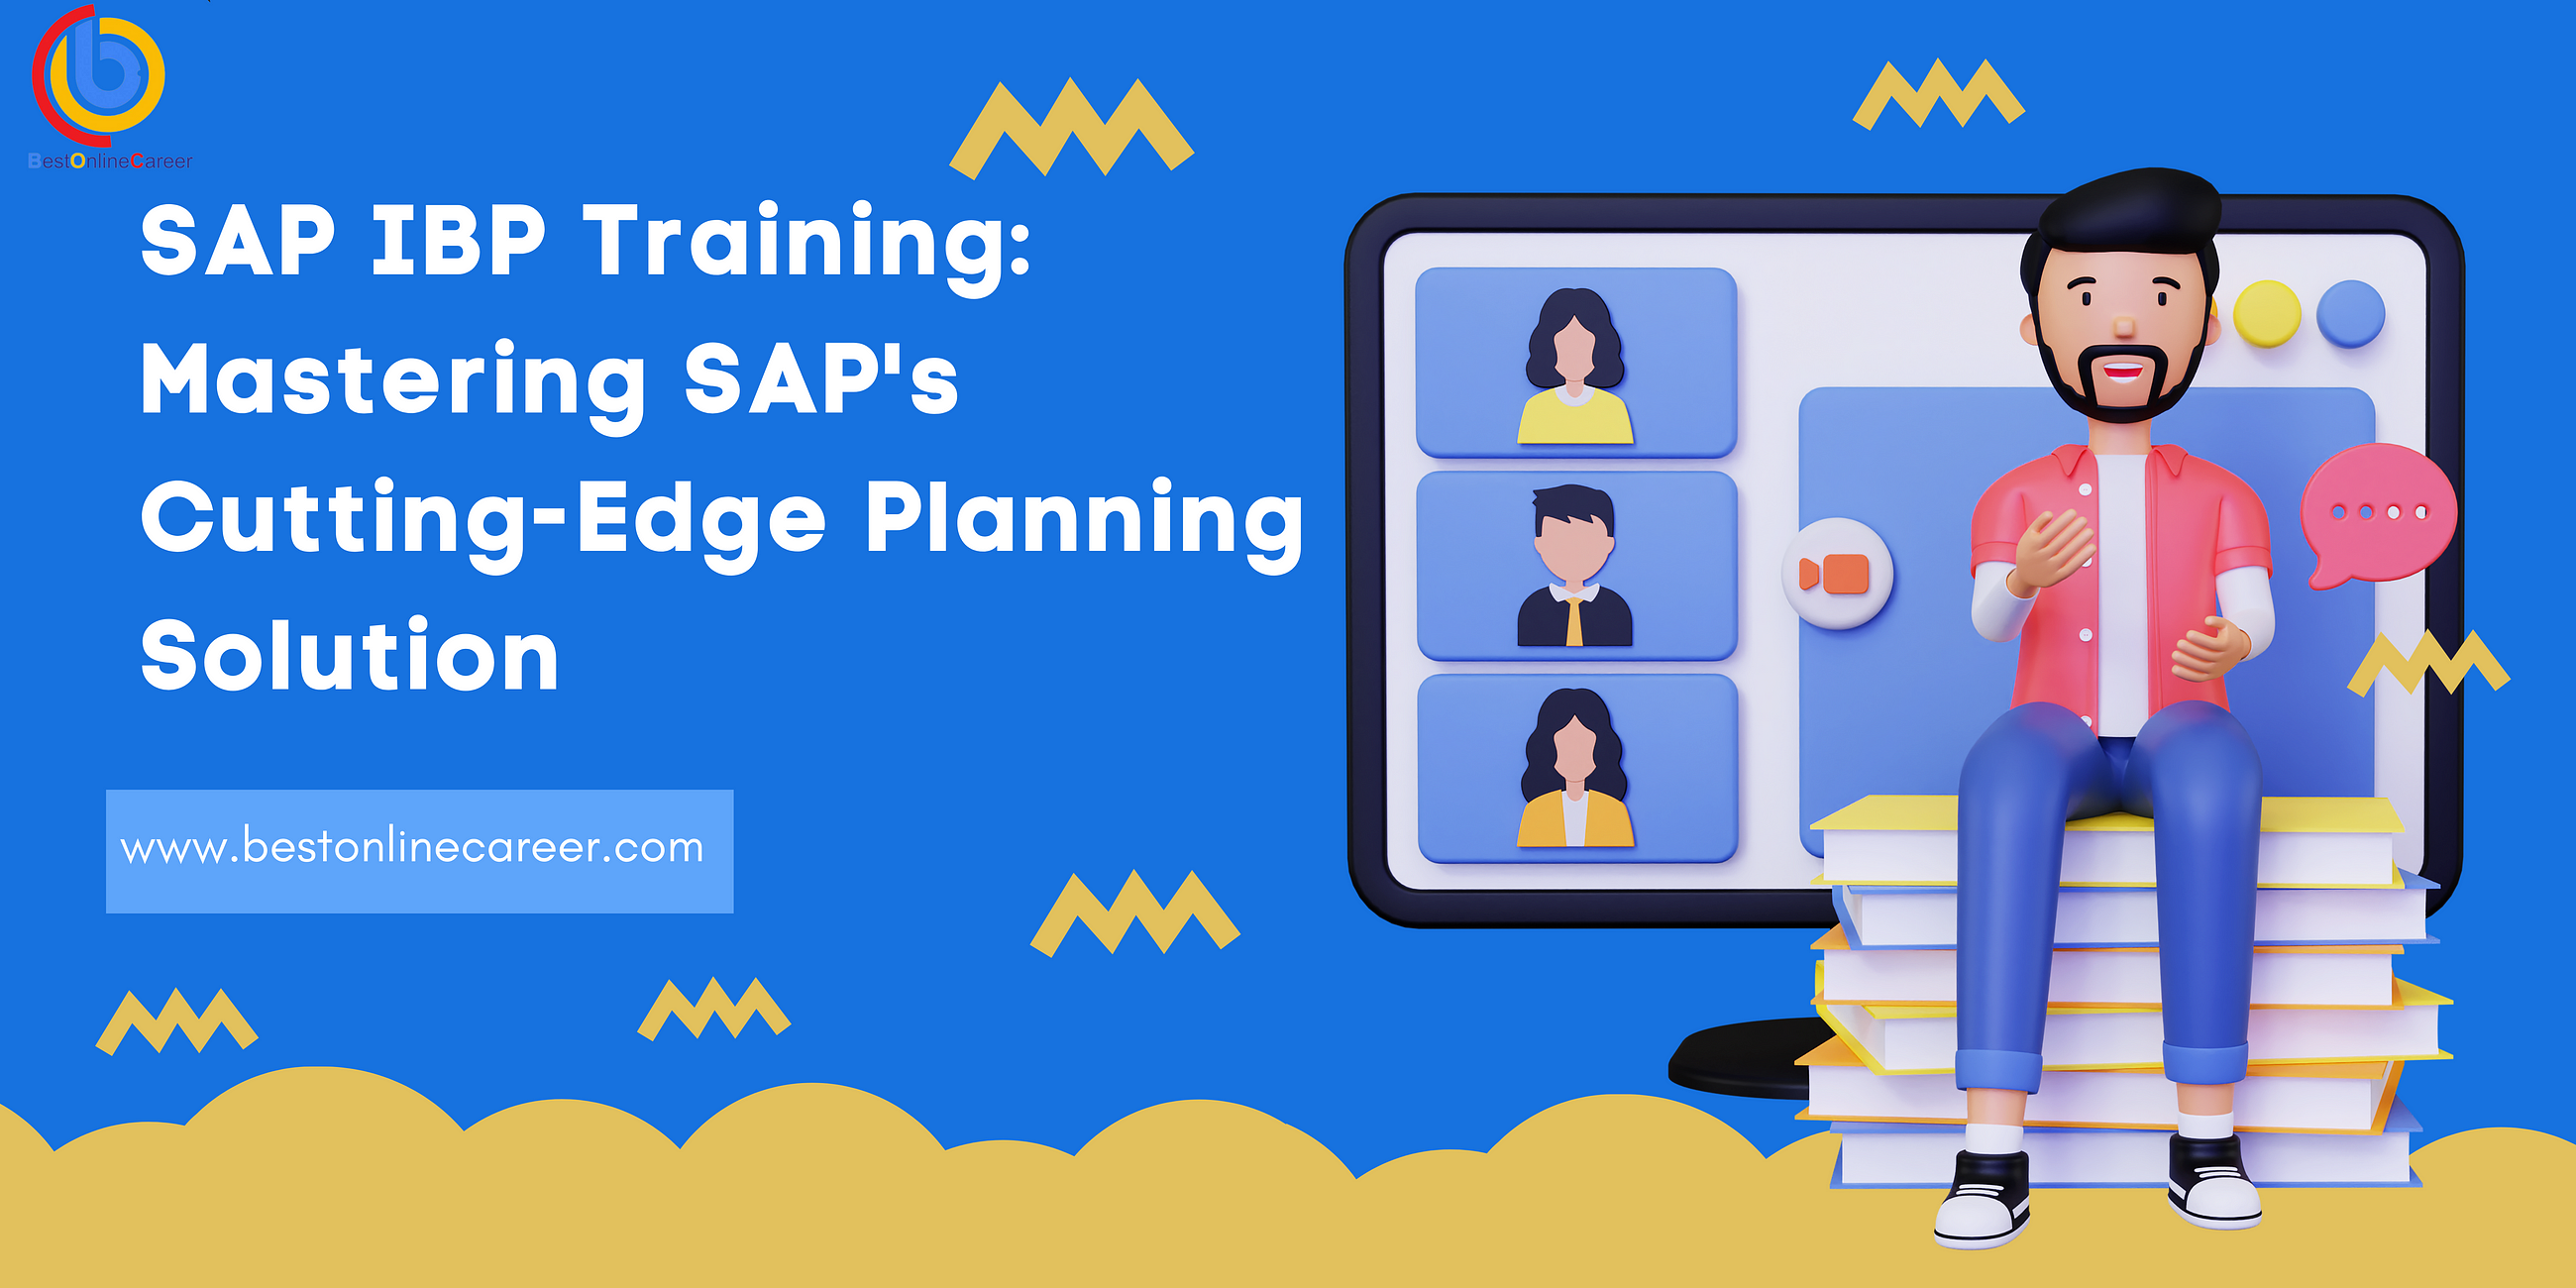 SAP IBP Training: Mastering SAP’s Cutting-Edge Planning Solution